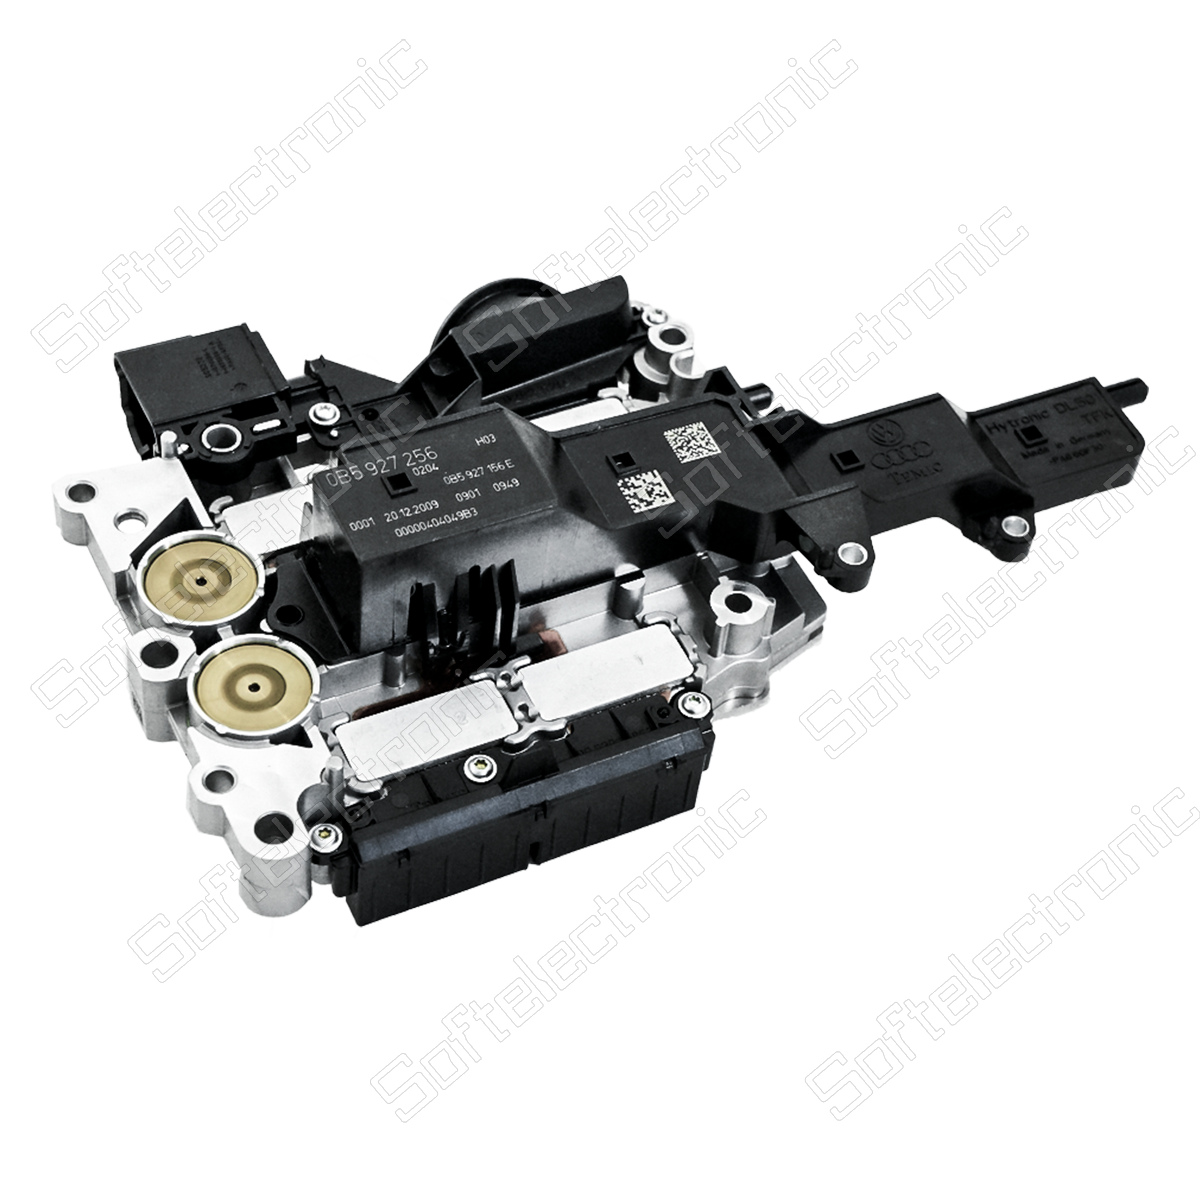 Repair DSG 0B5 S-Tronic 7-Speed Automatic Transmission Mechatronic